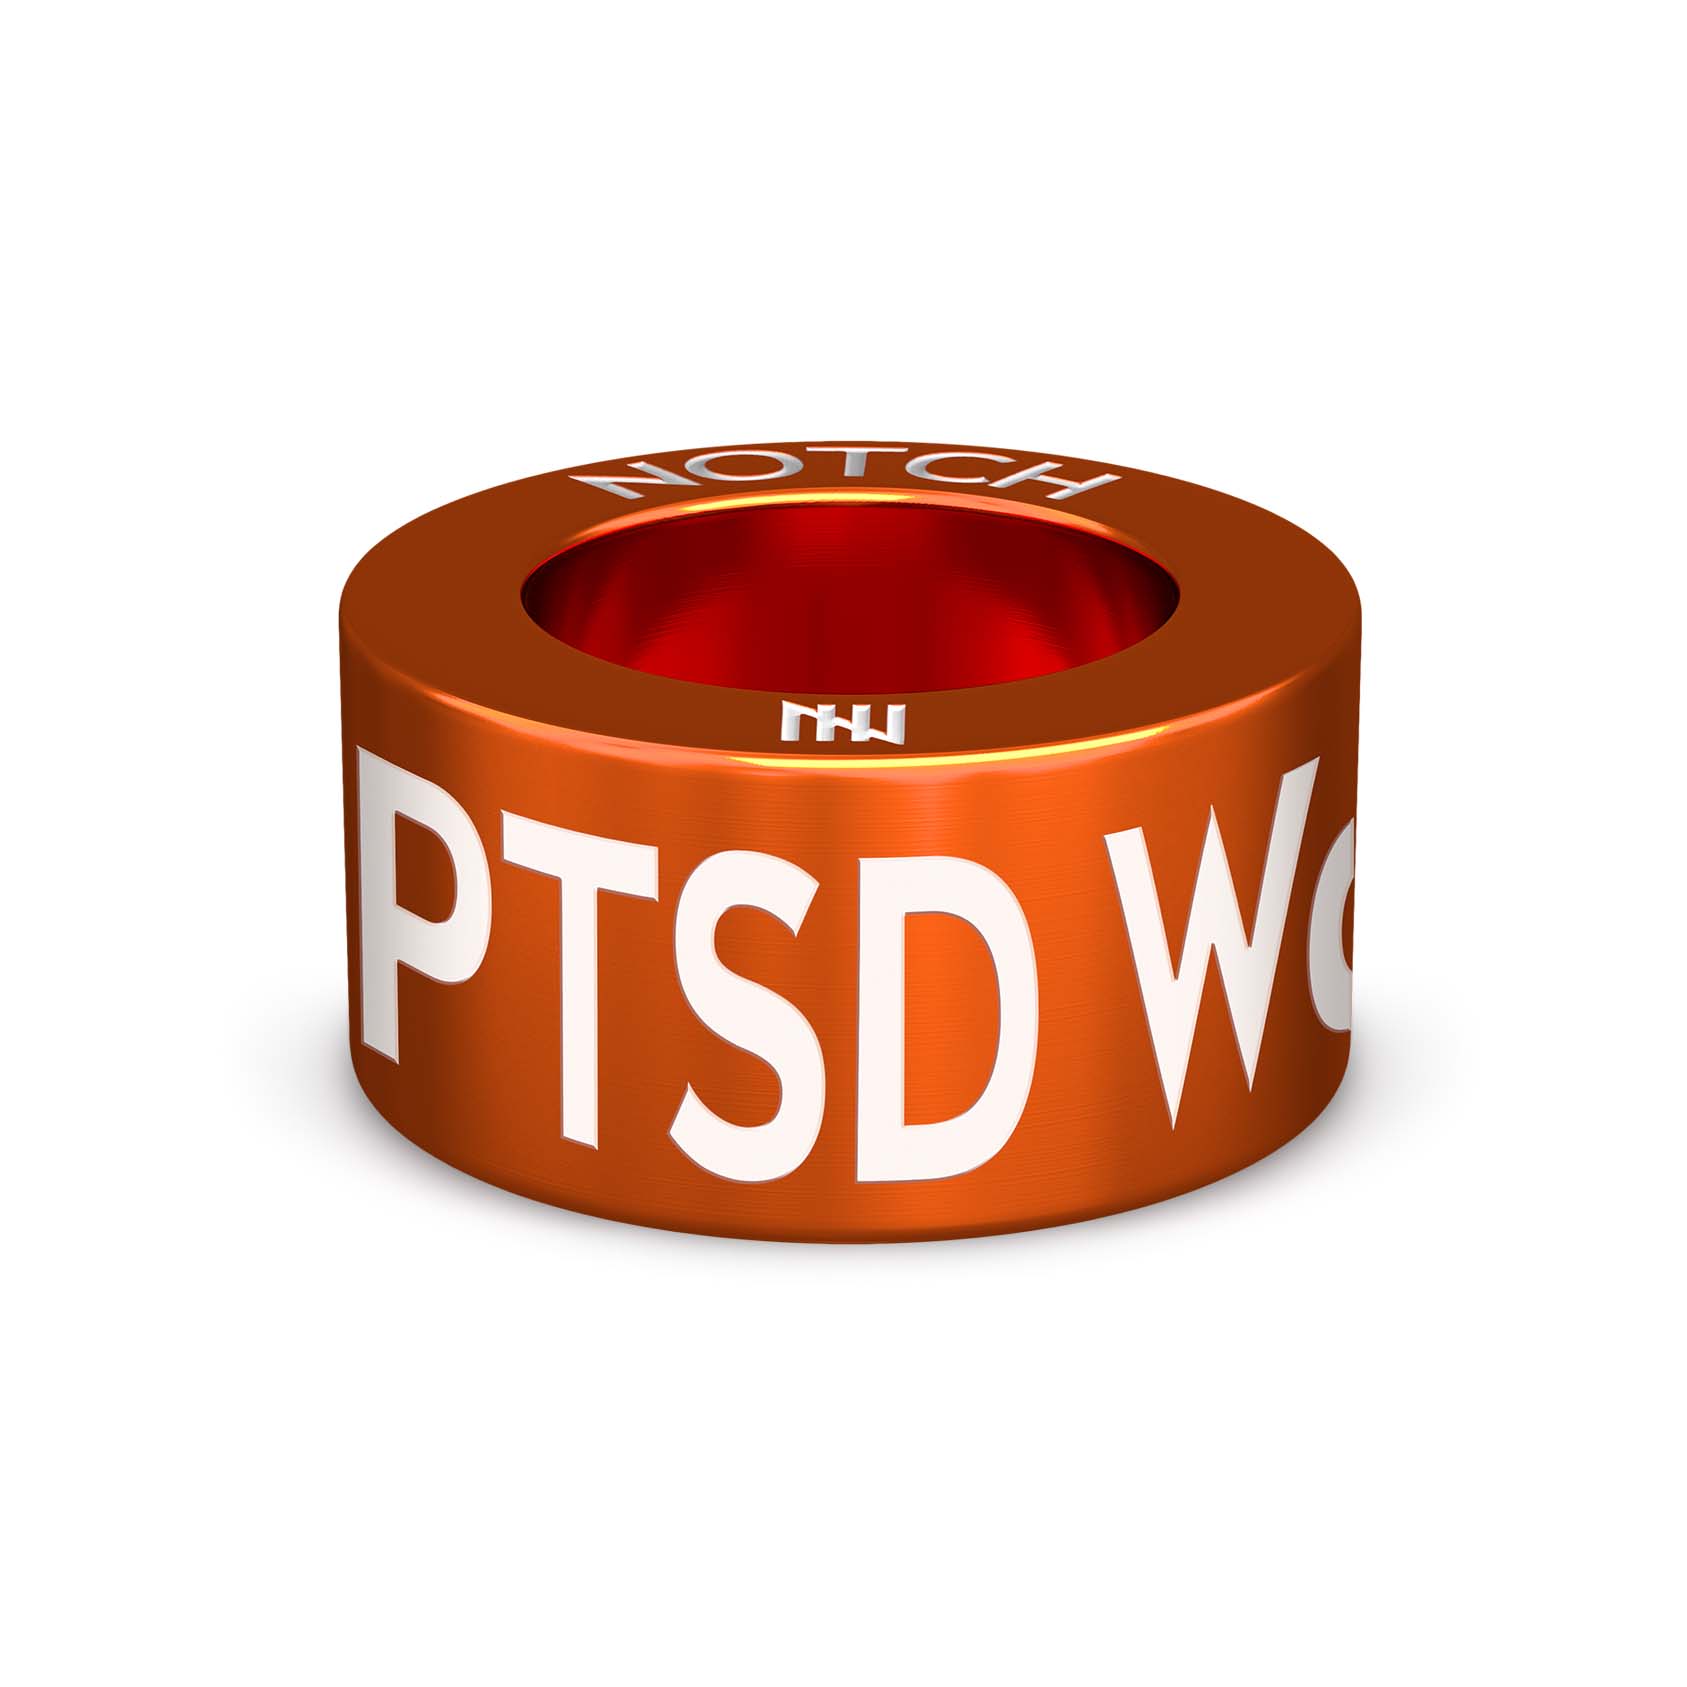 PTSD Warrior NOTCH Charm